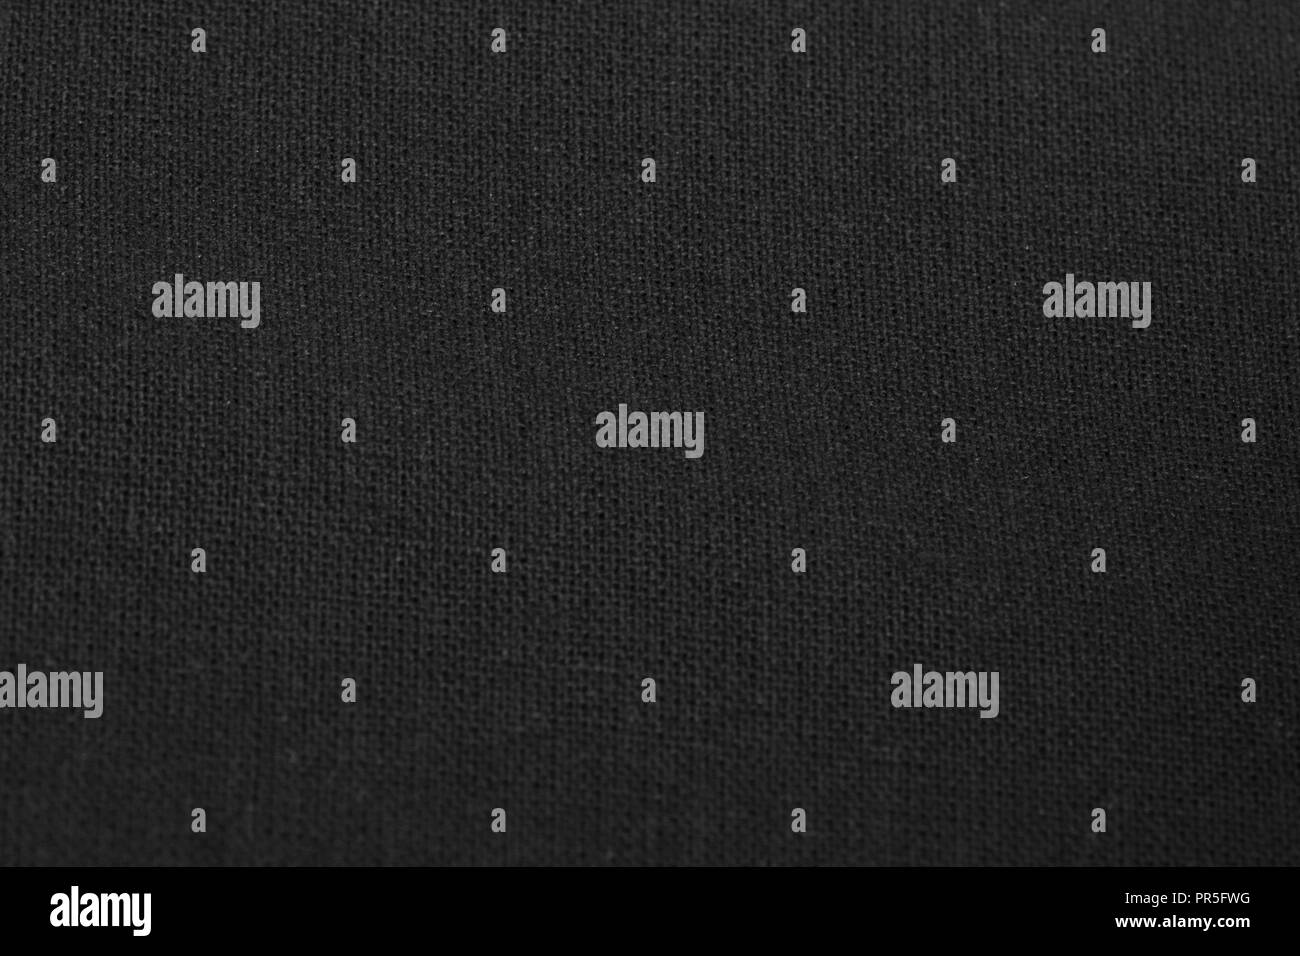 Black Cotton Fabric Texture As Background Stock Photo Alamy